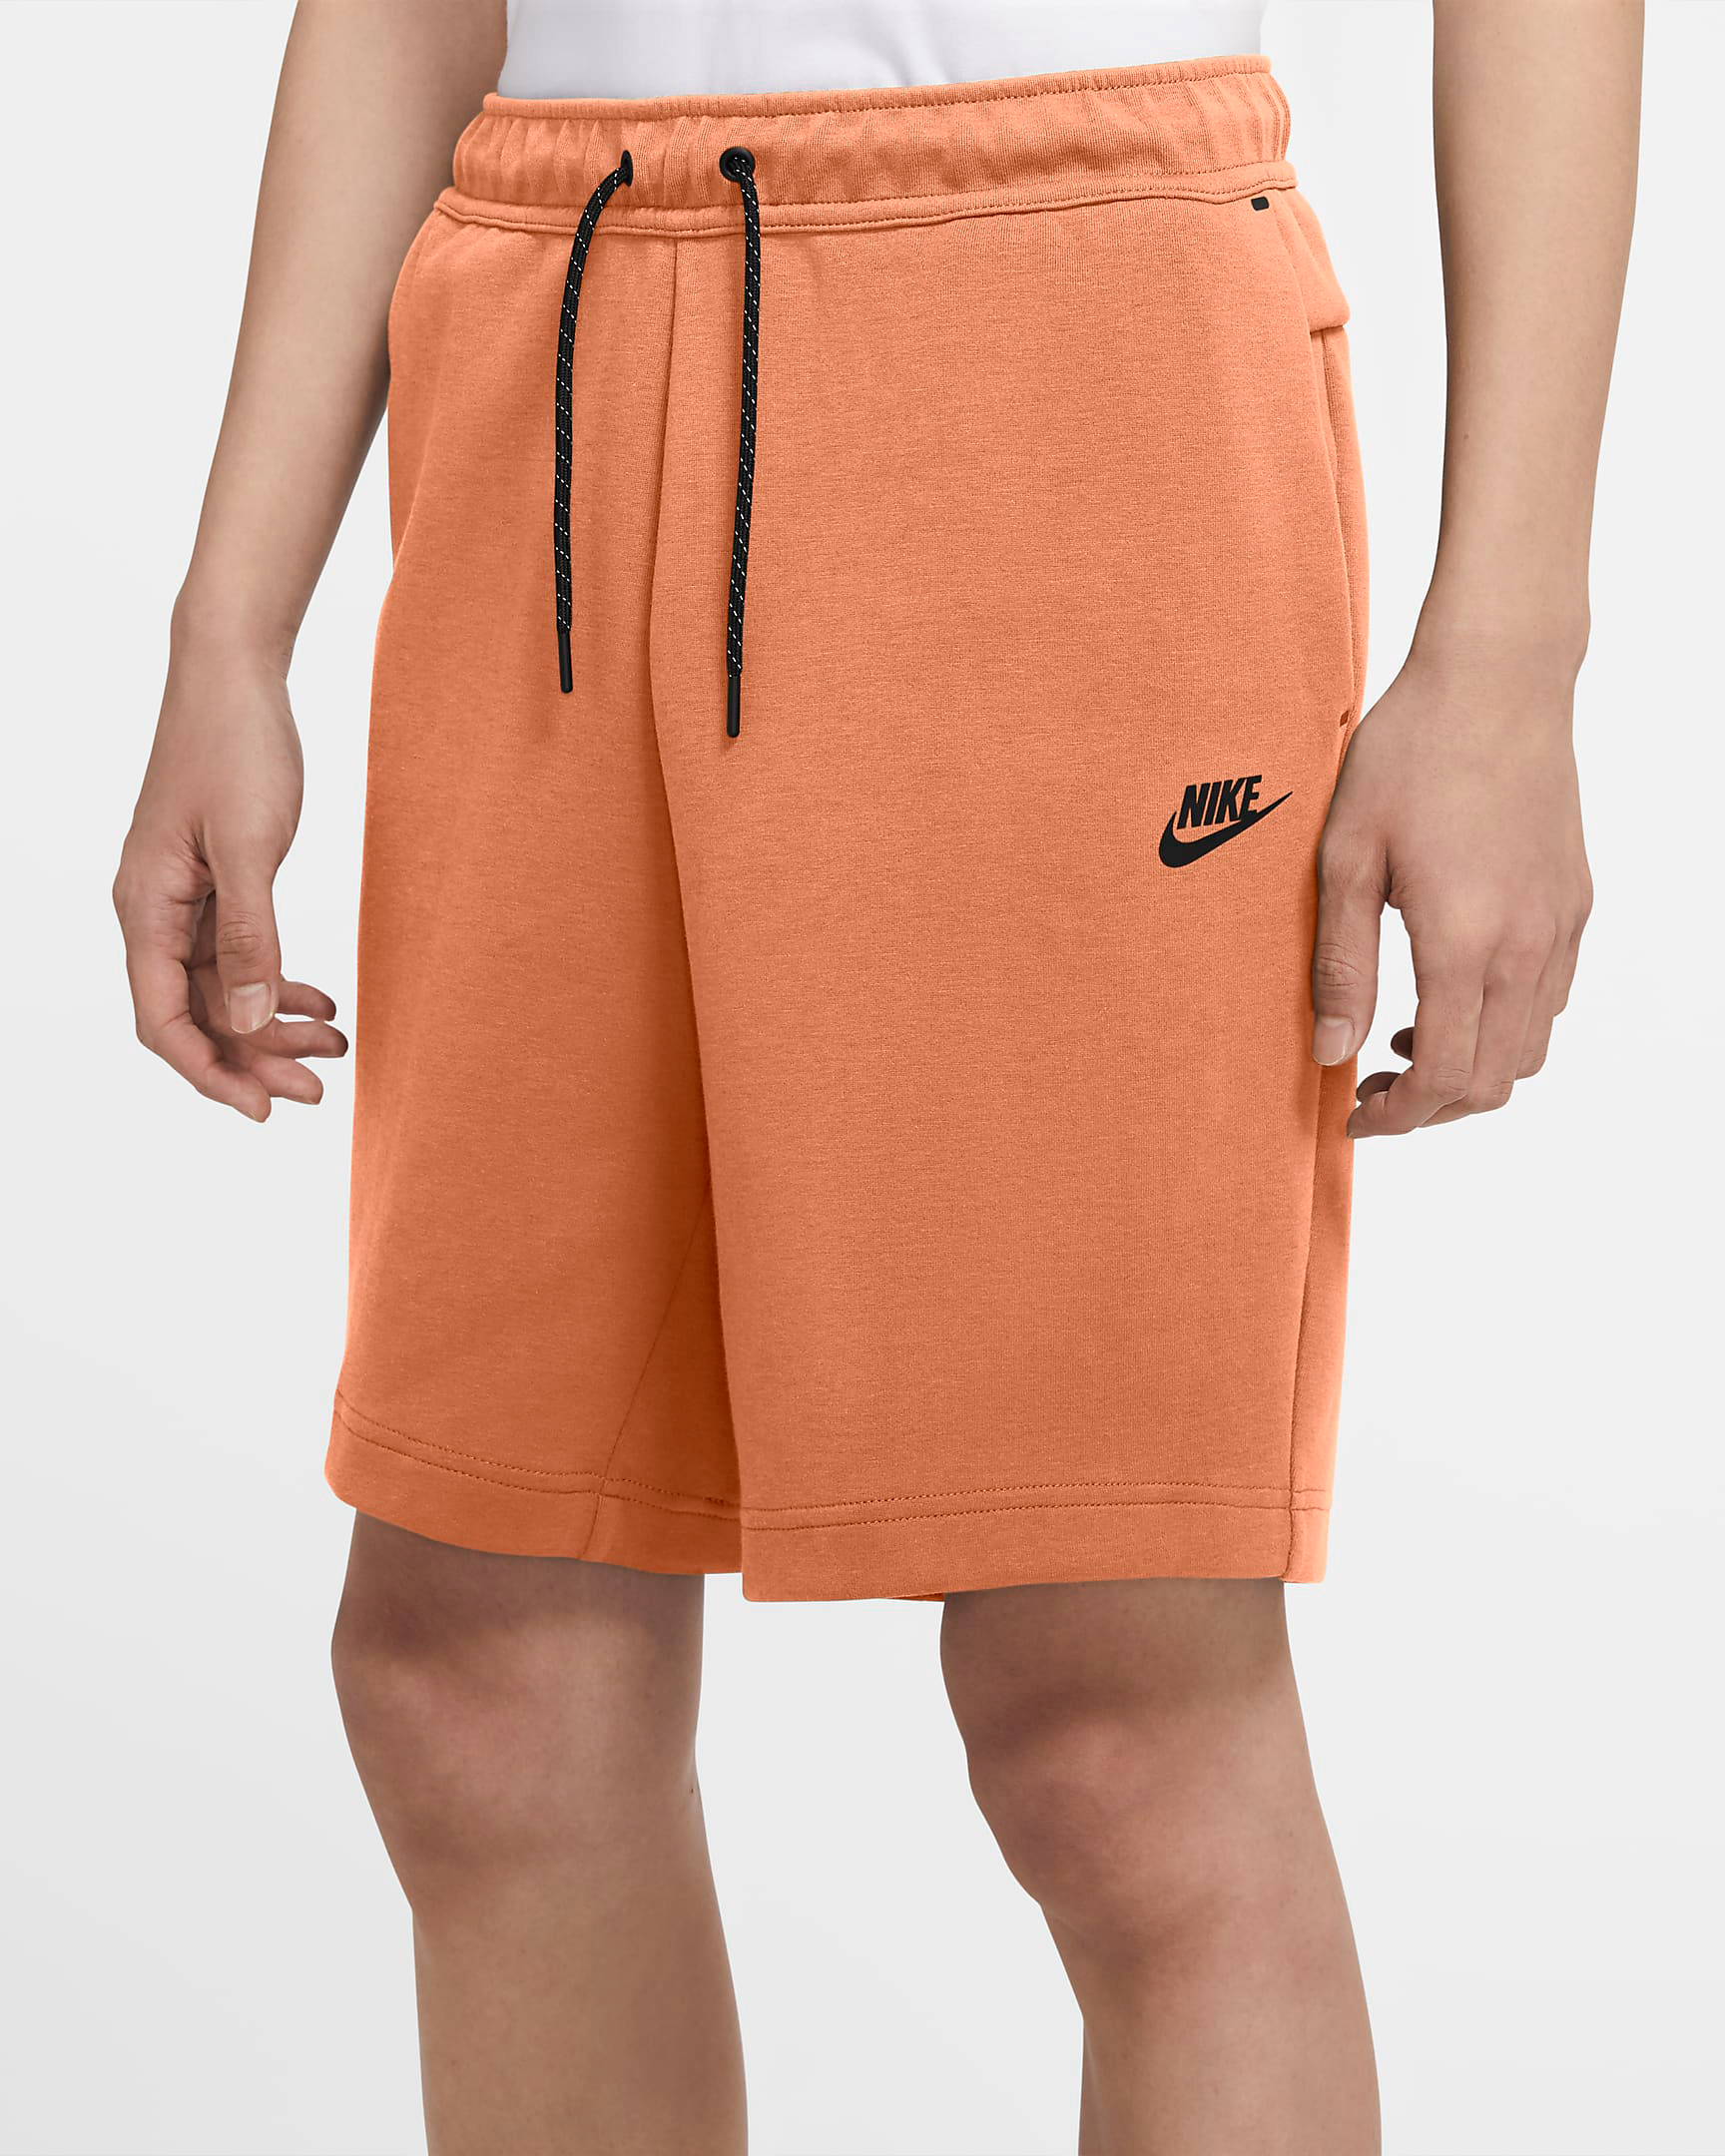 nike-air-max-97-los-angeles-orange-tech-fleece-shorts